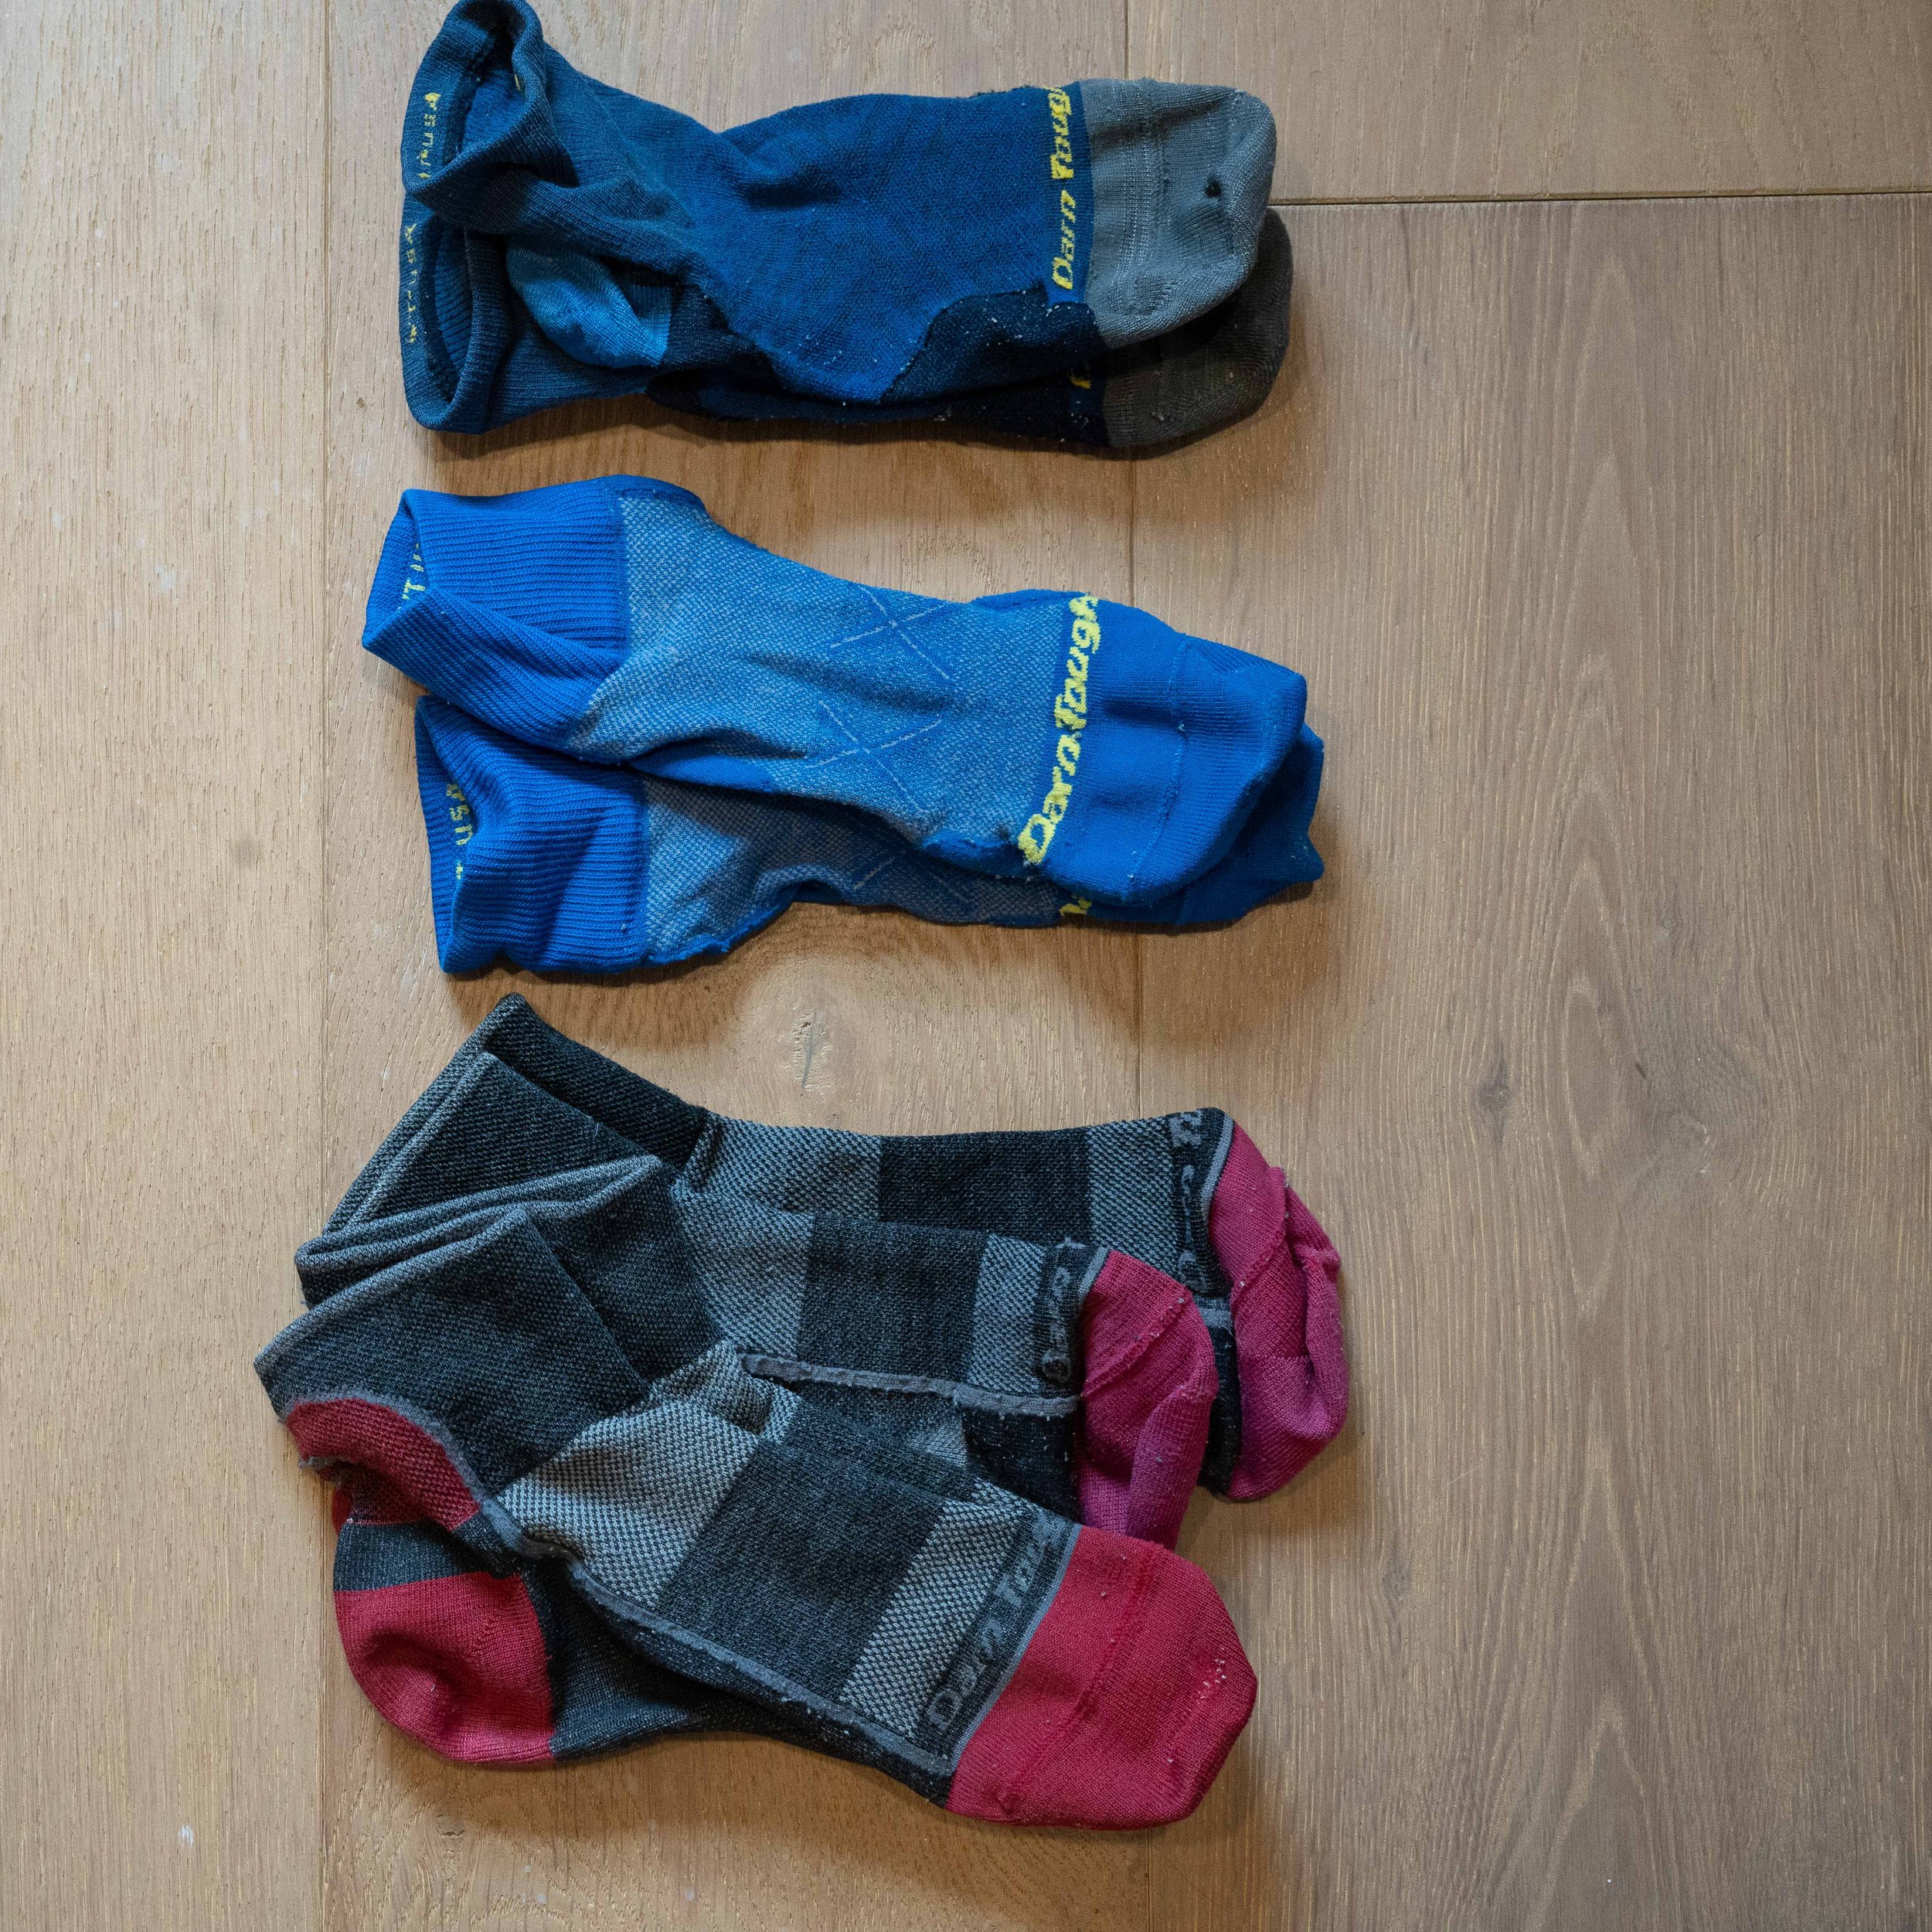 Darn Tough Socks Review — Always Wander